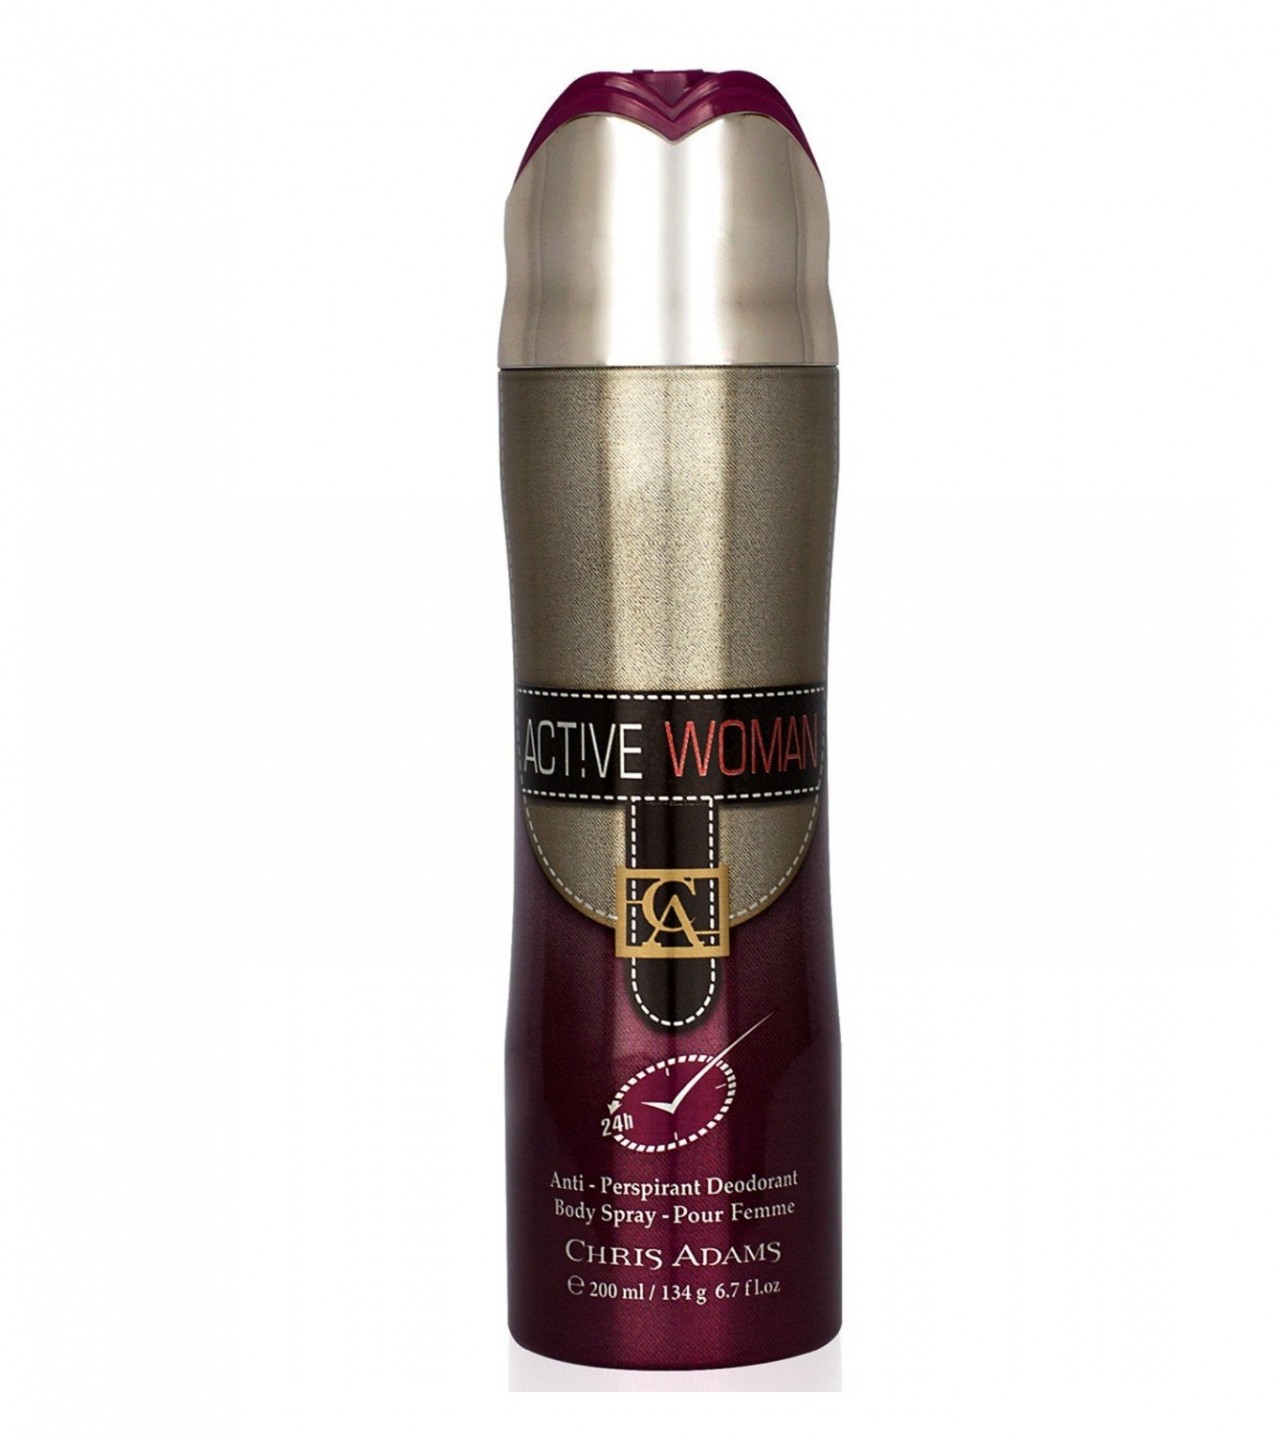 Chris Adams Active Woman Body Spray Deodorant For Women - 200 ml